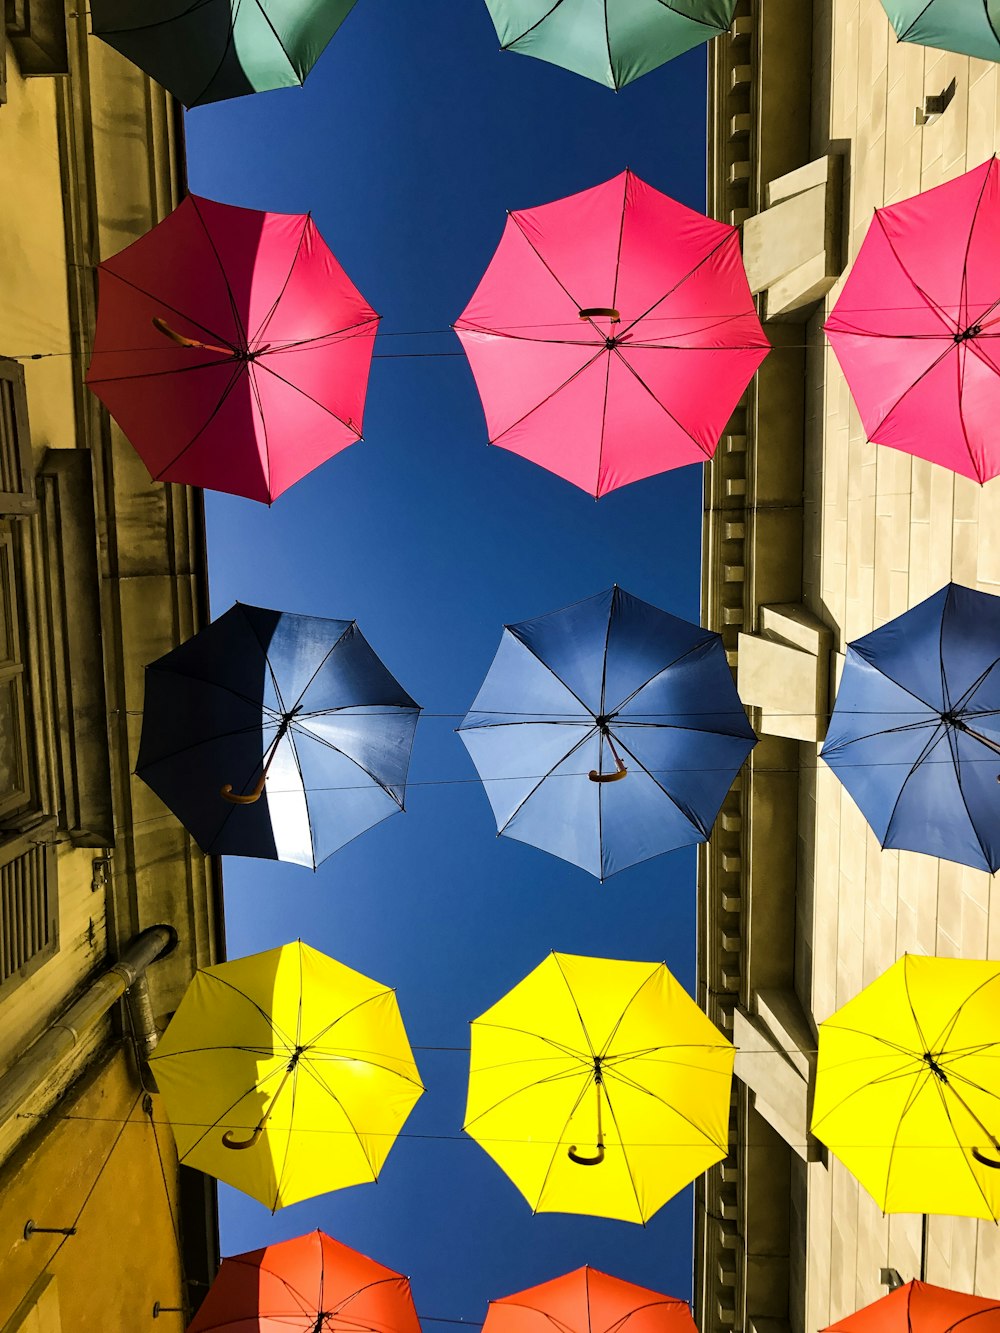 green, pink, blue, yellow, and orange umbrellas hanging in between buildings